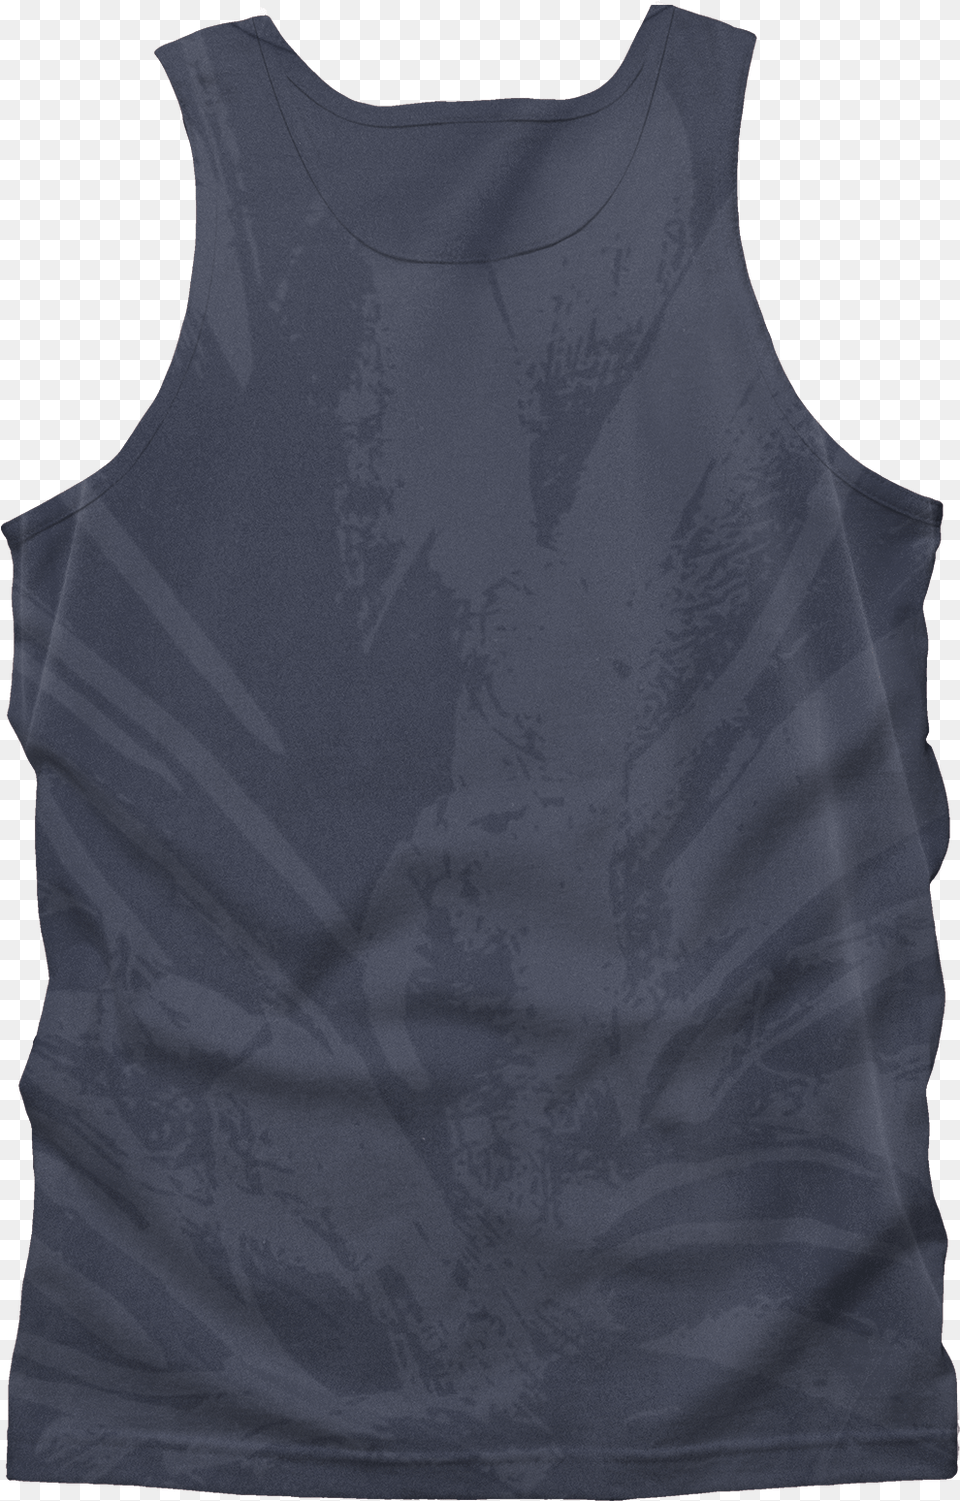 Midnight Navytitle Midnight Navy Vest, Clothing, Tank Top, Undershirt Png Image